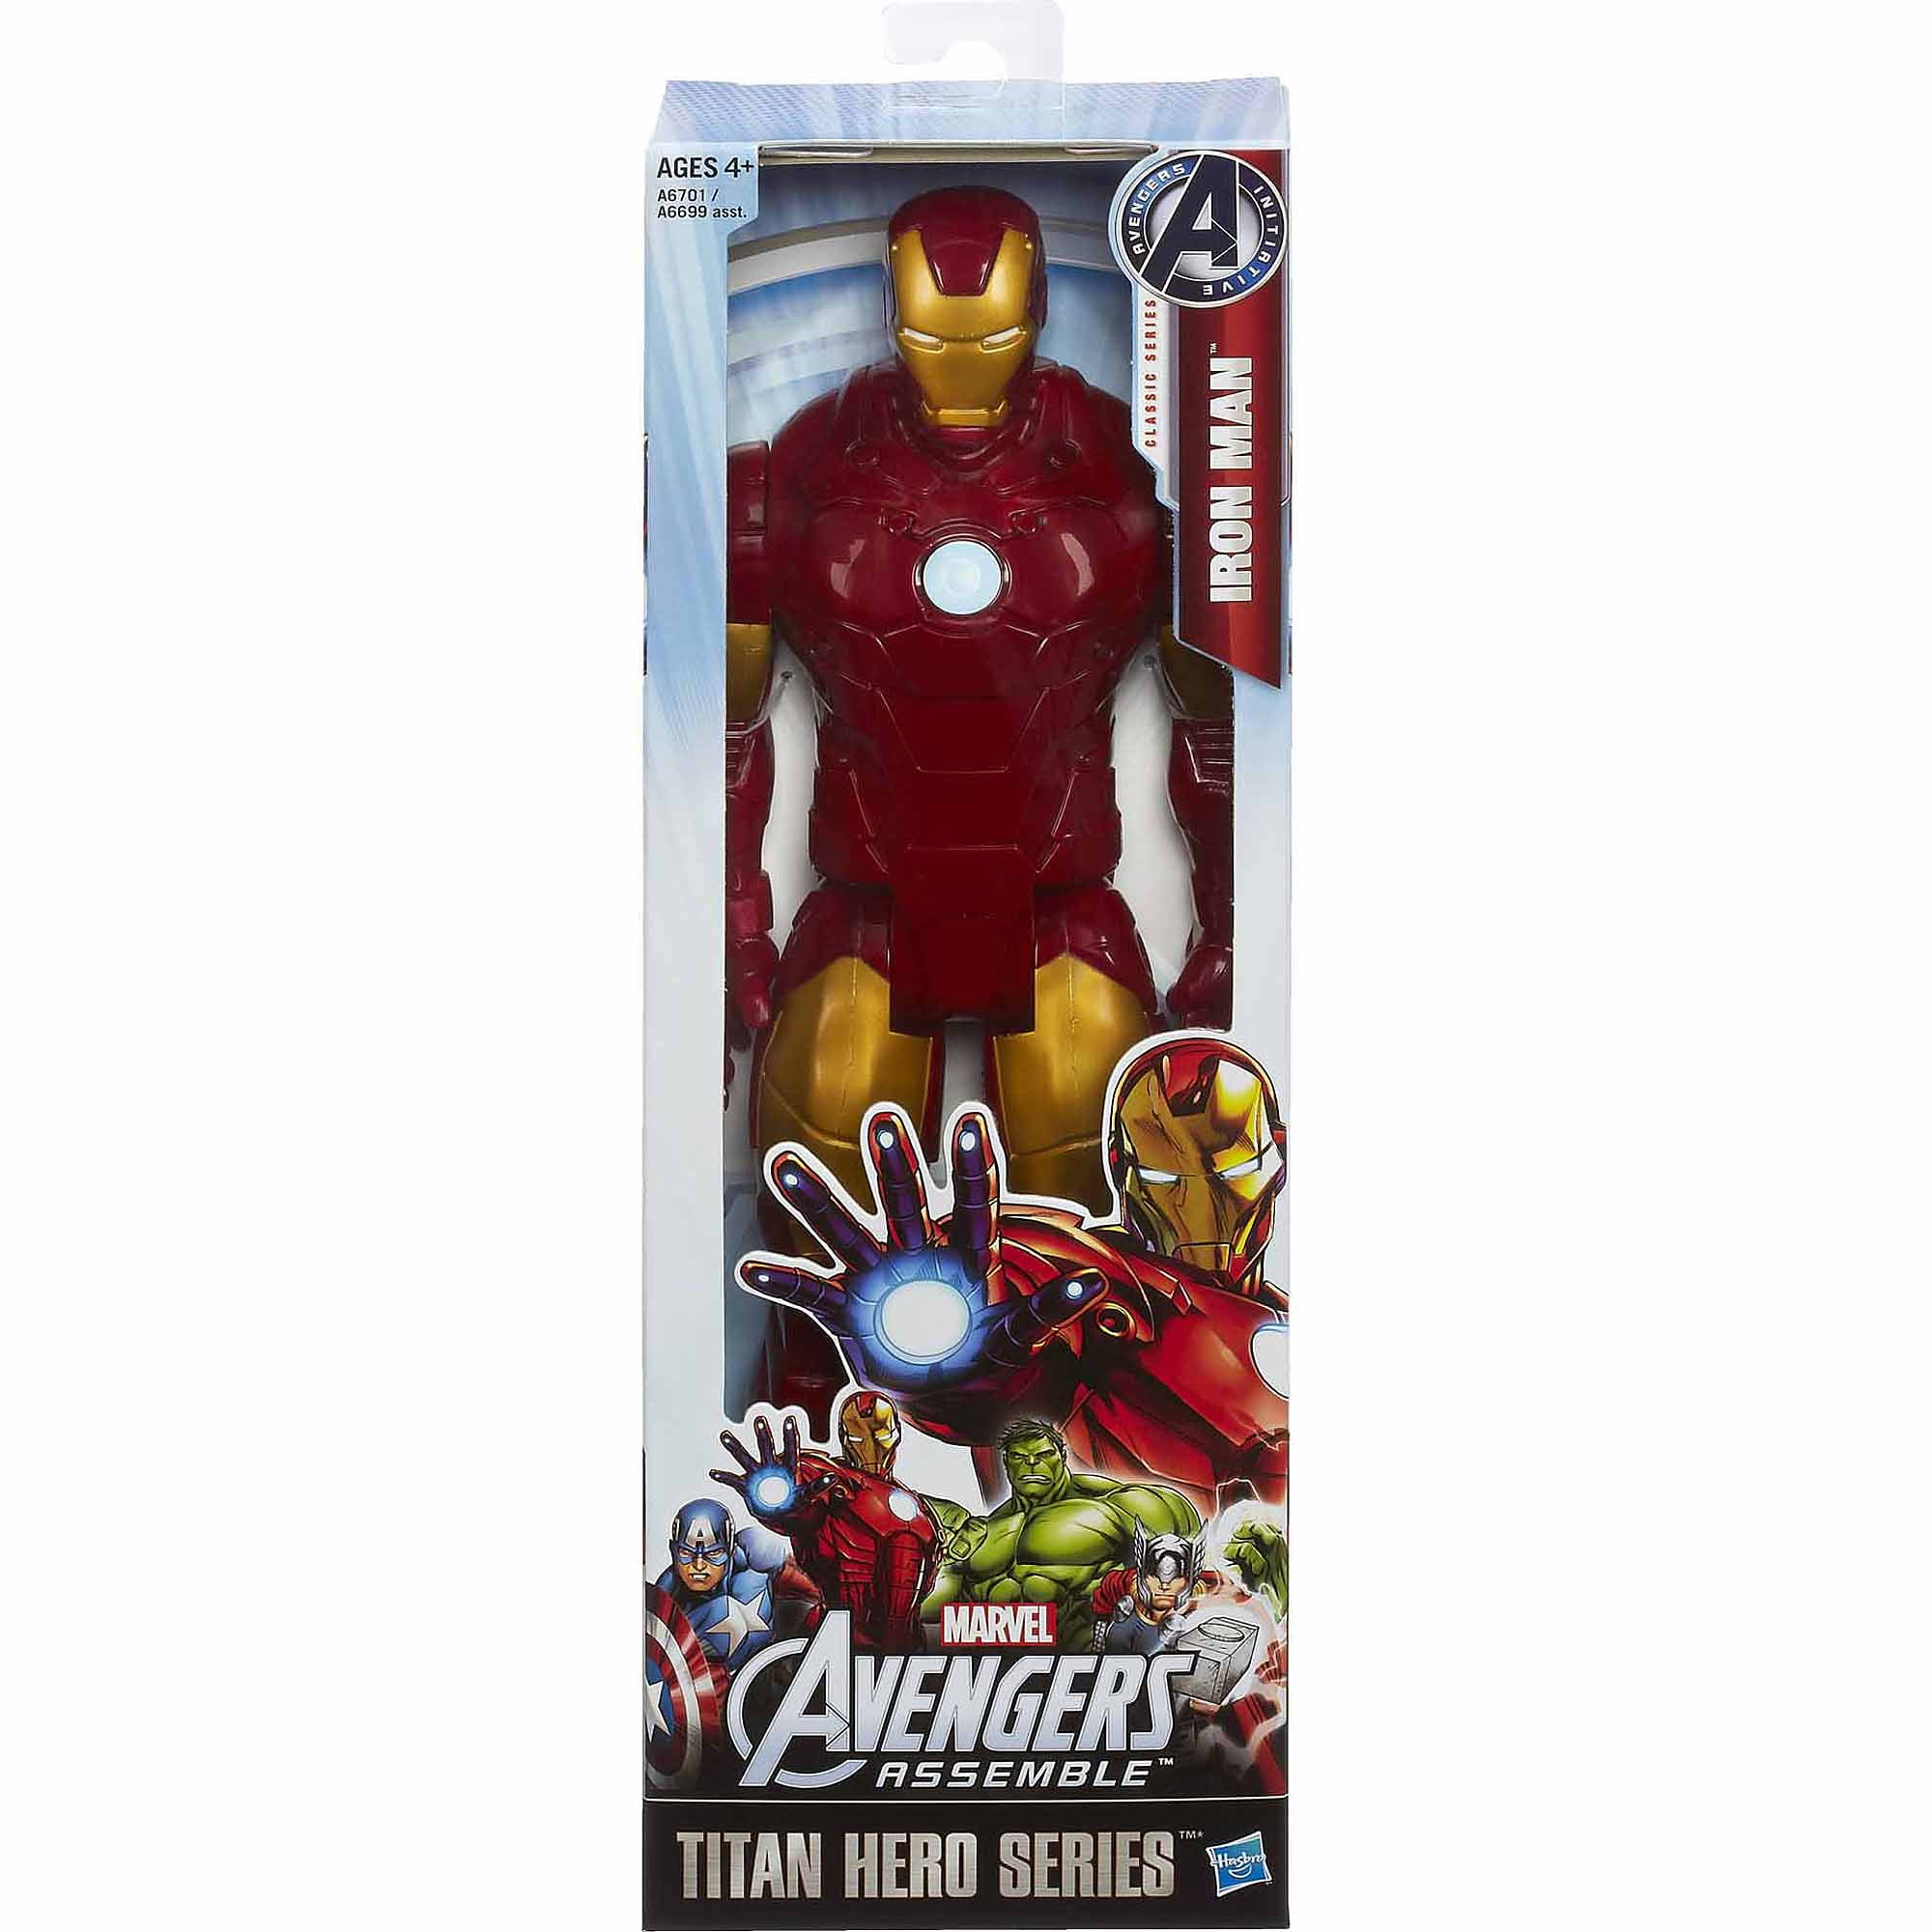 Marvel Avengers Assemble TITAN Hero Series Iron Man 12in Figure for sale online